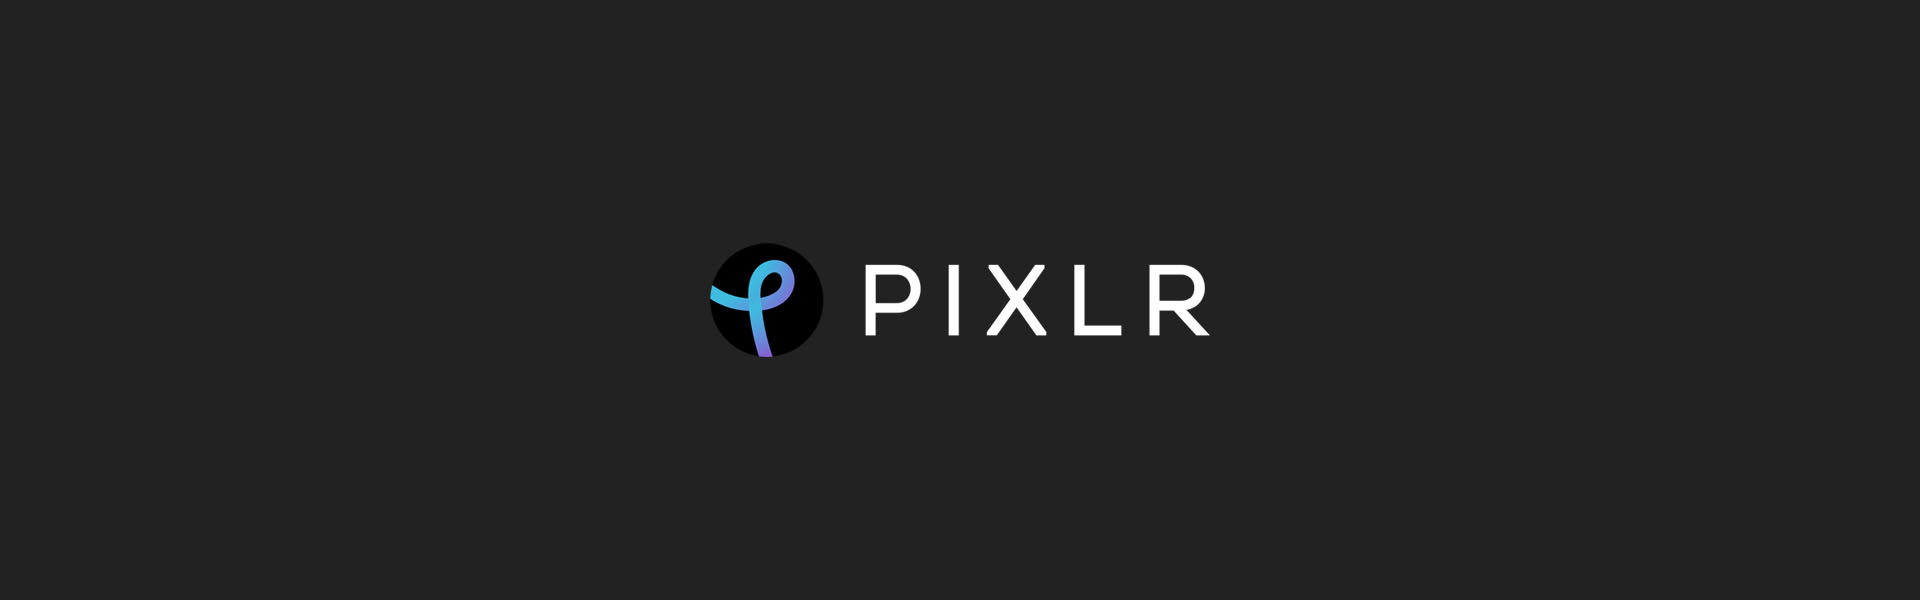 Pixlr – Digital Knowledge Center